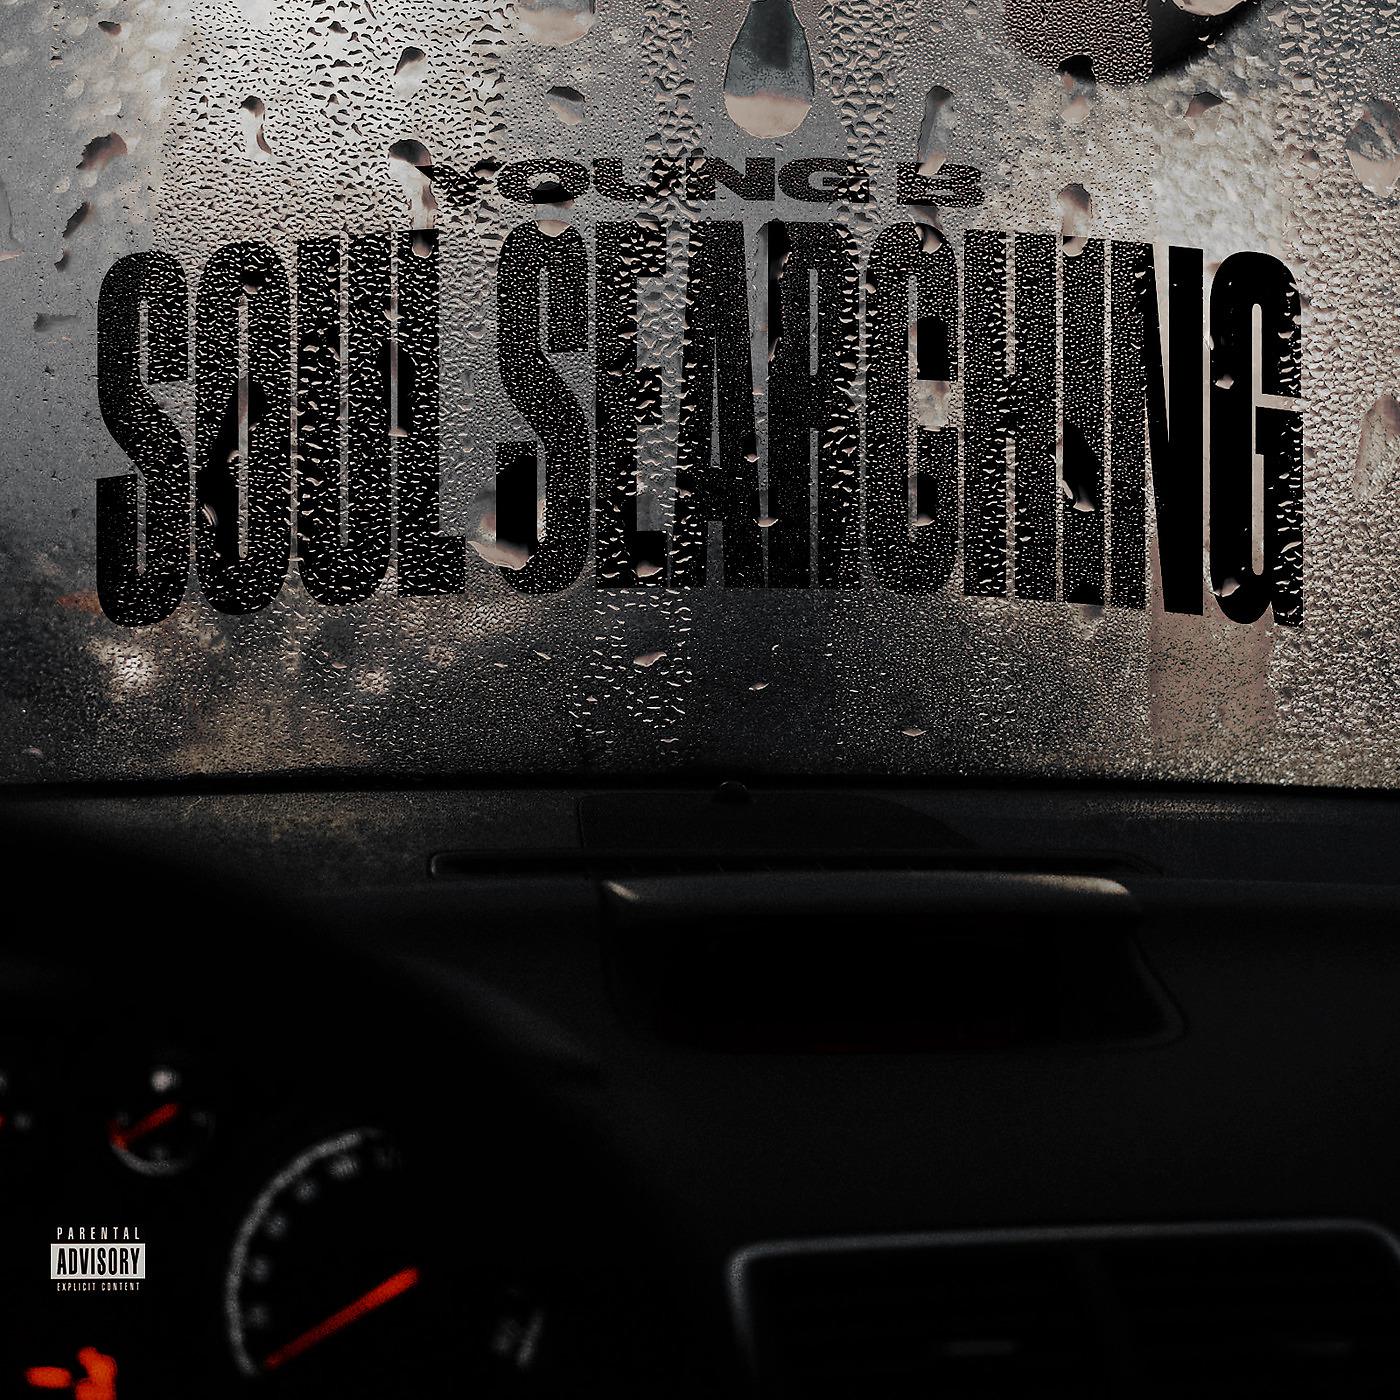 Постер альбома Soul Searching